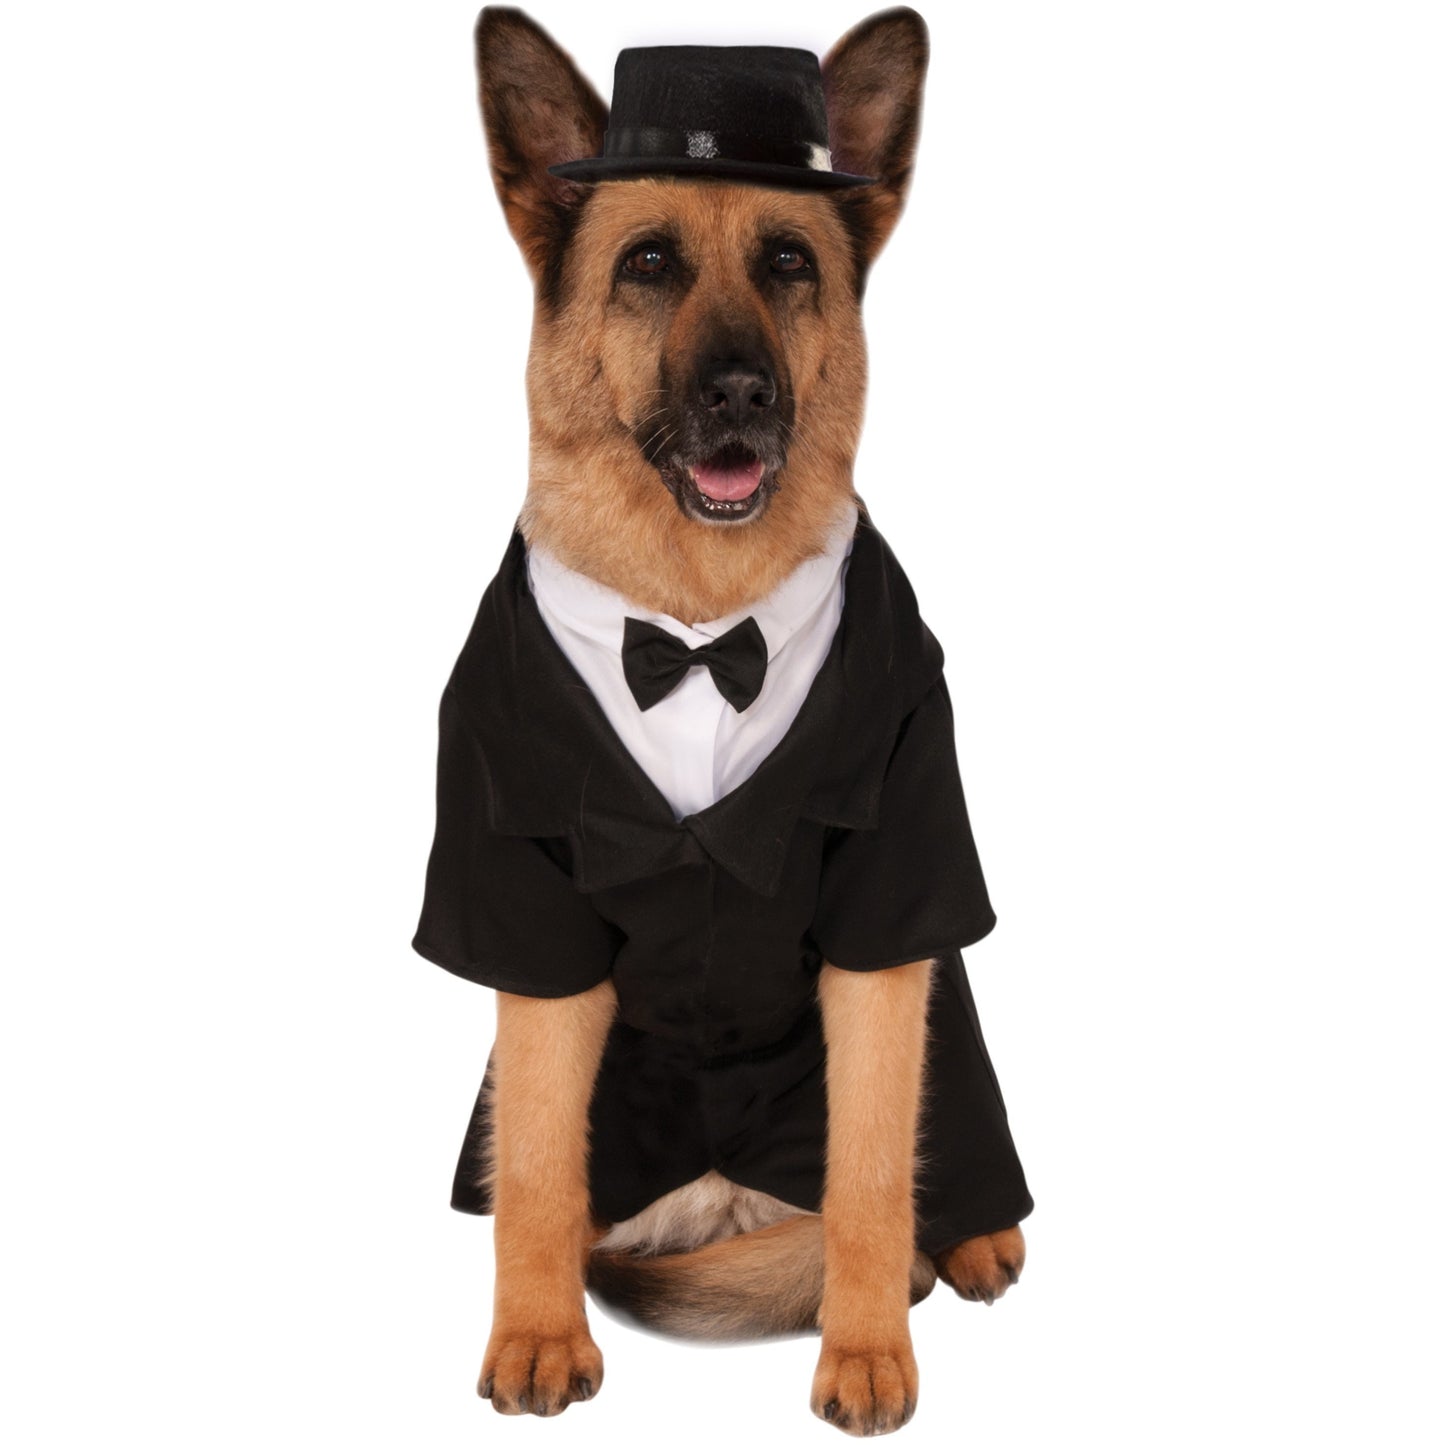 Big Dog Dapper Suit Pet Costume